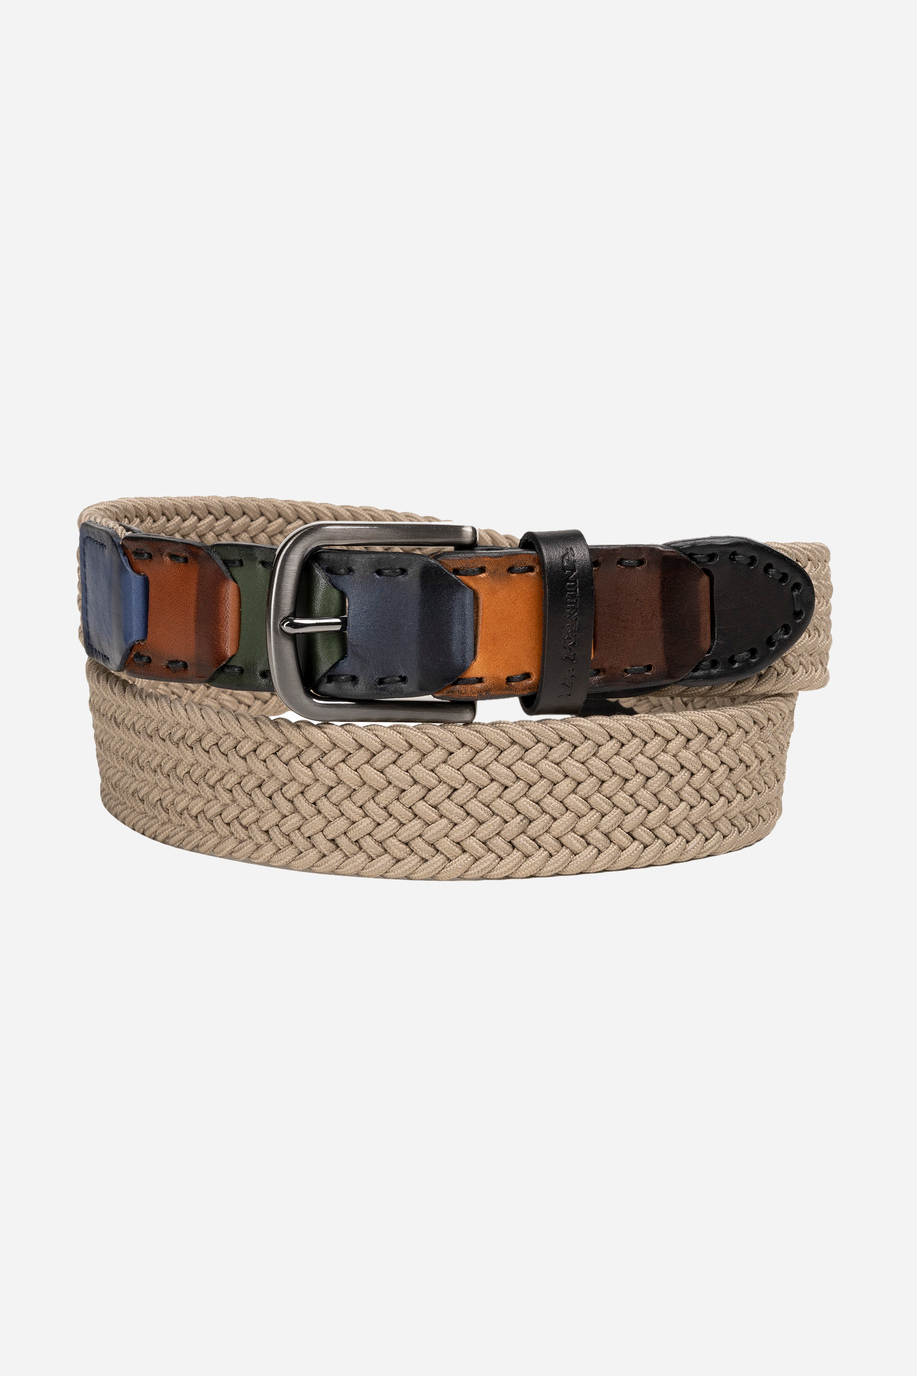 Men's belt in leather and fabric - Belts | La Martina - Official Online Shop